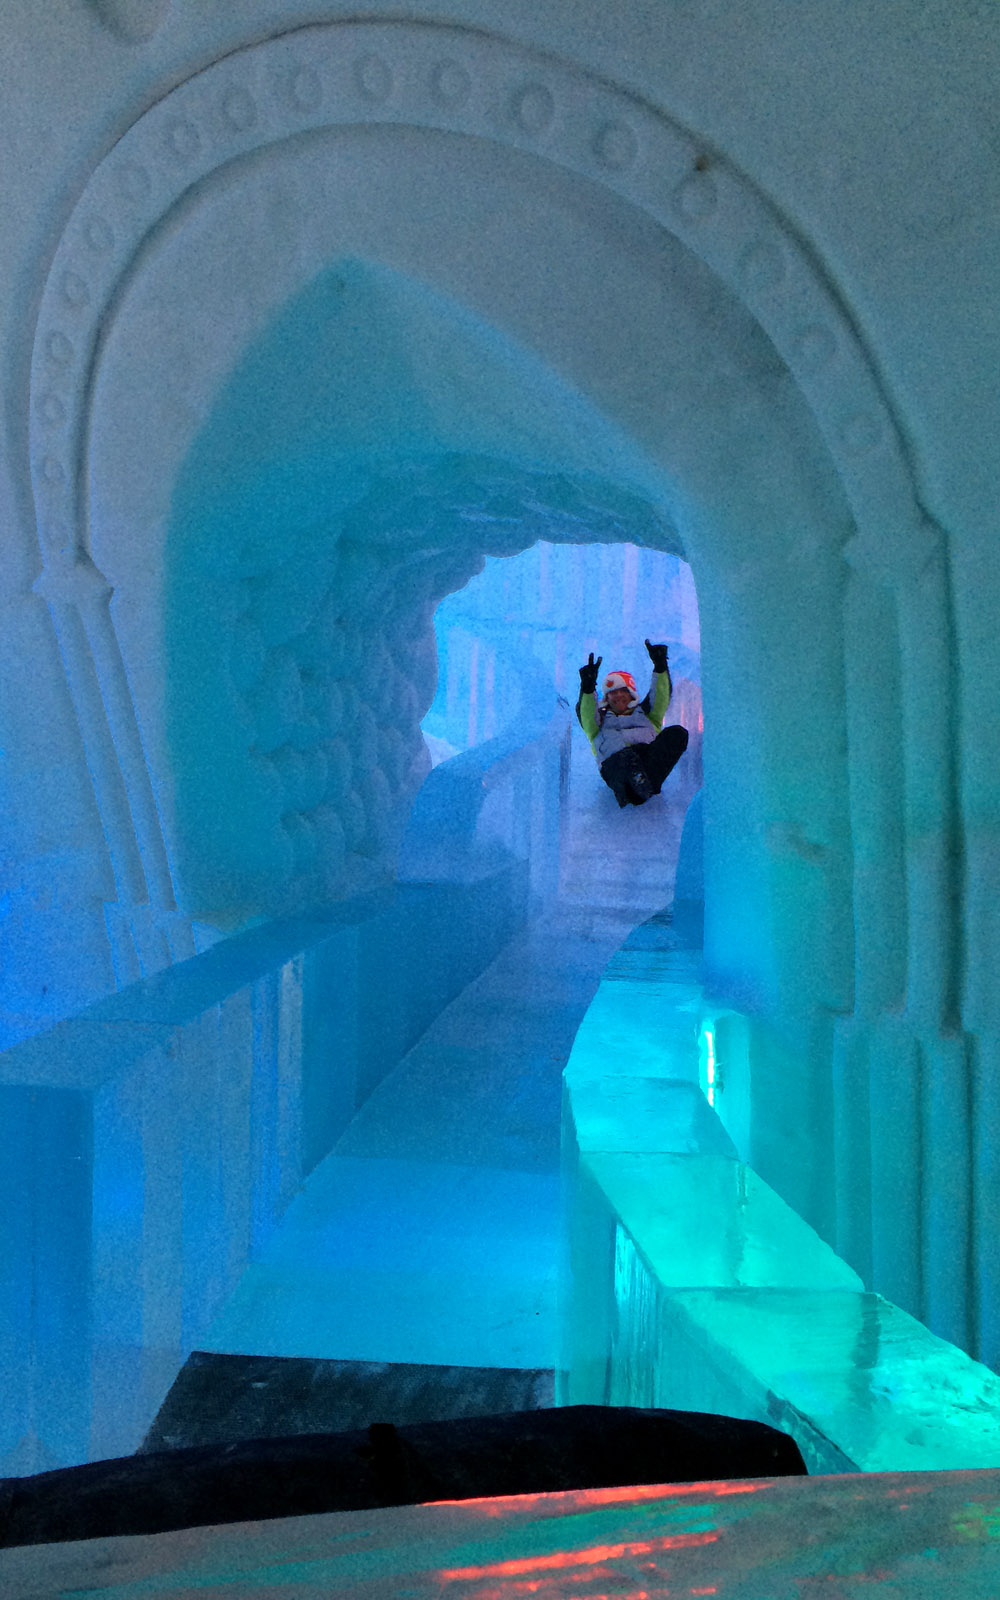 Robin on Slide in Hôtel de Glace :: A Night of Ice in Québec City :: I've Been Bit! A Travel Blog